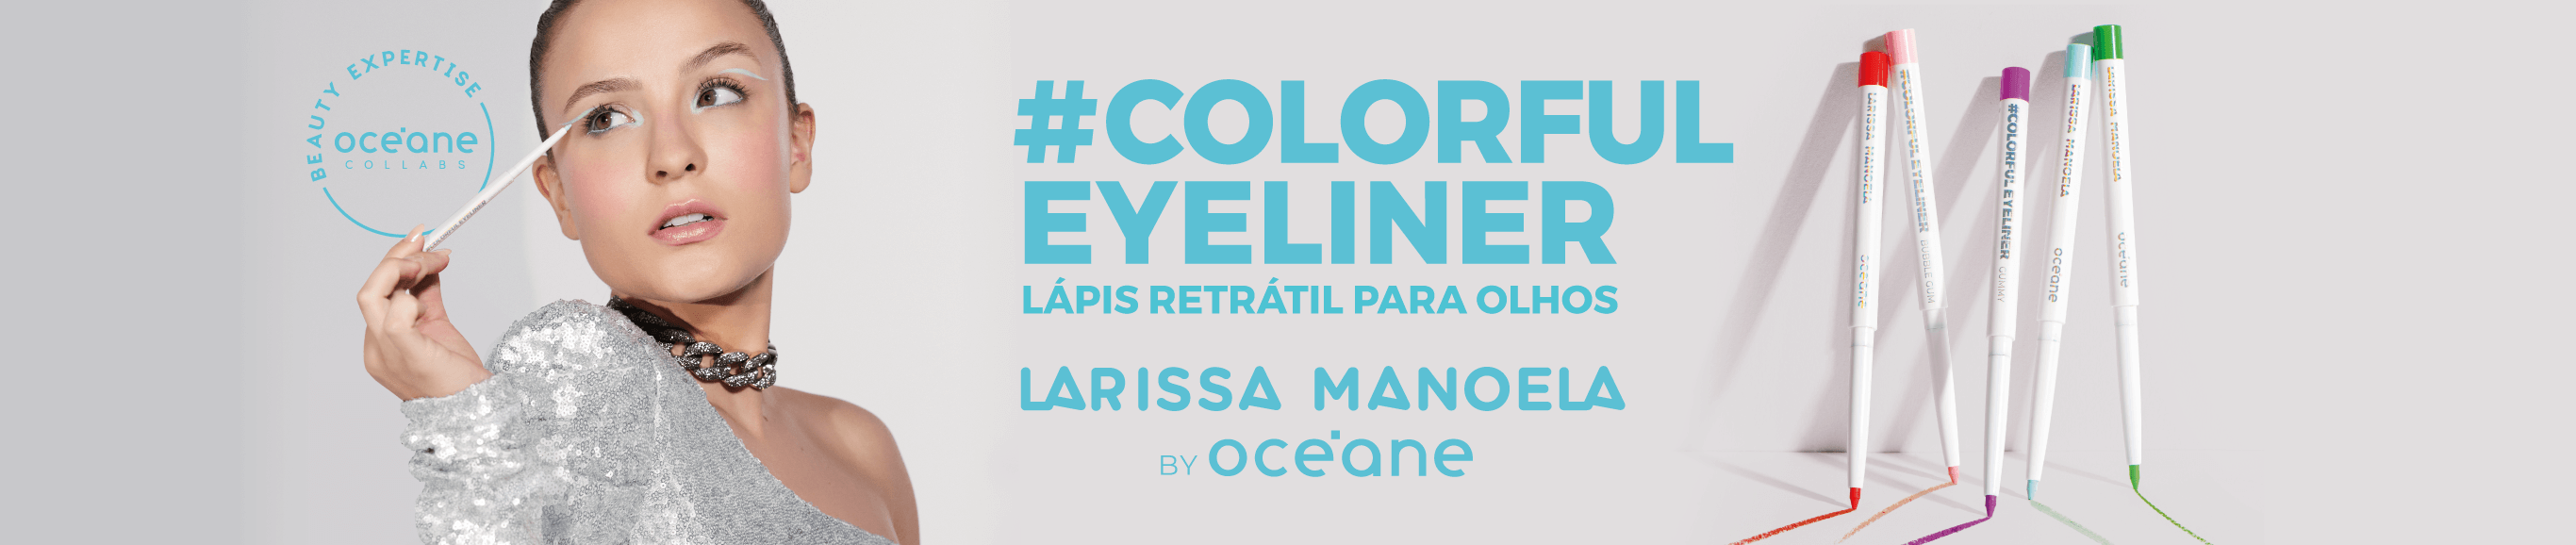 Banner lançamento linha de maquiagem Larissa Manoela by Océane - Lápis Delineador Colorful Eyeliner